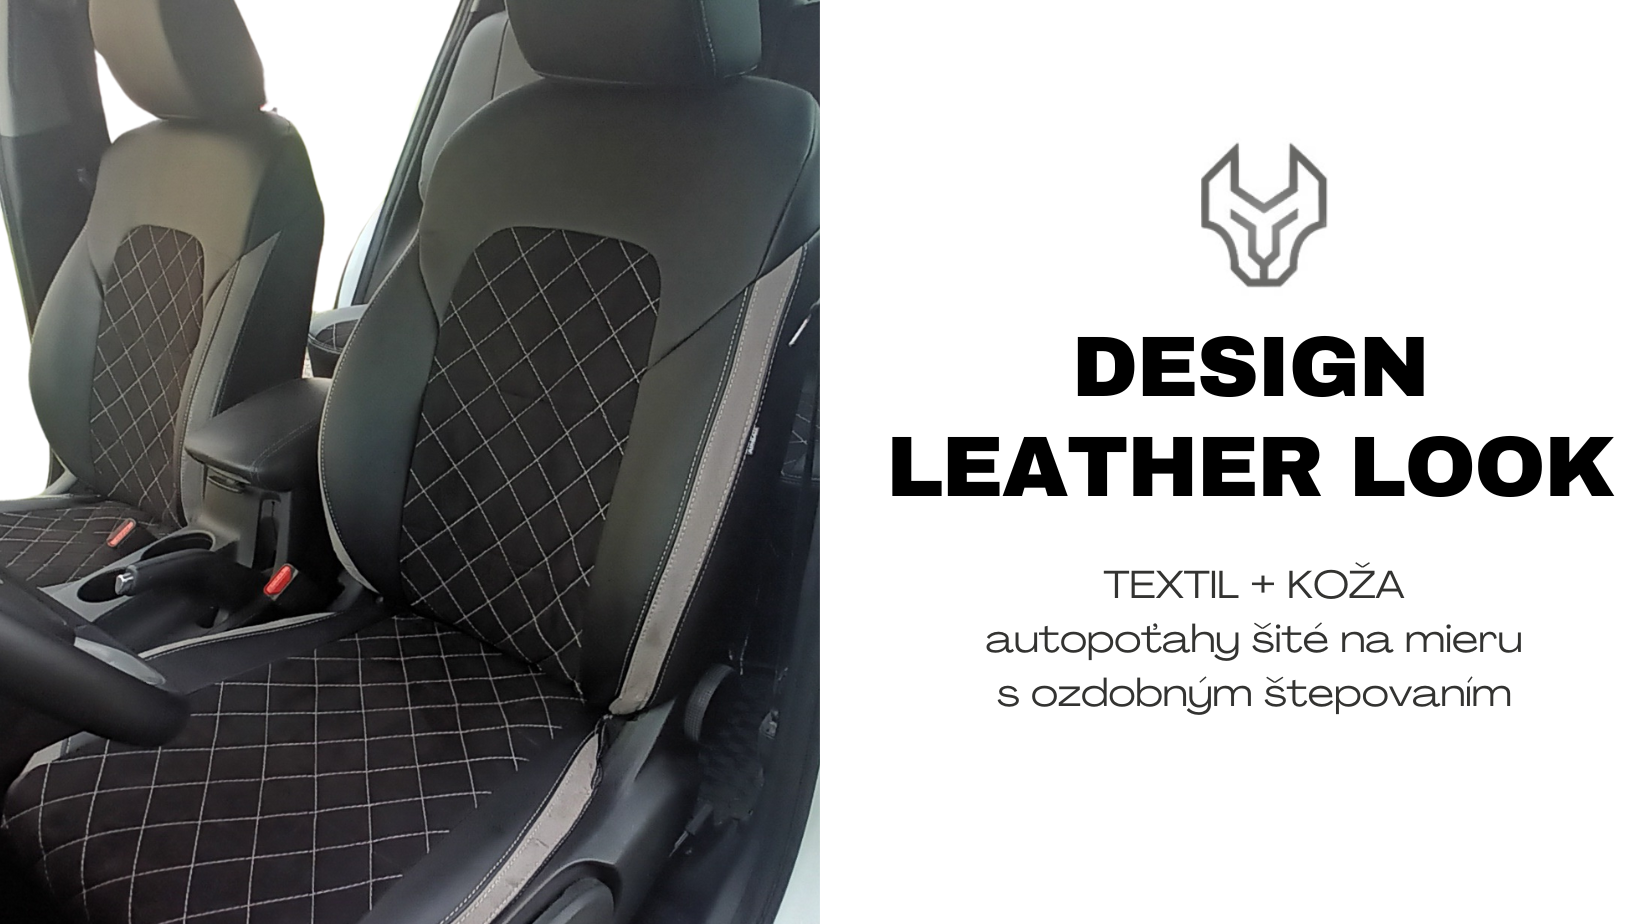 autopotahy leather look